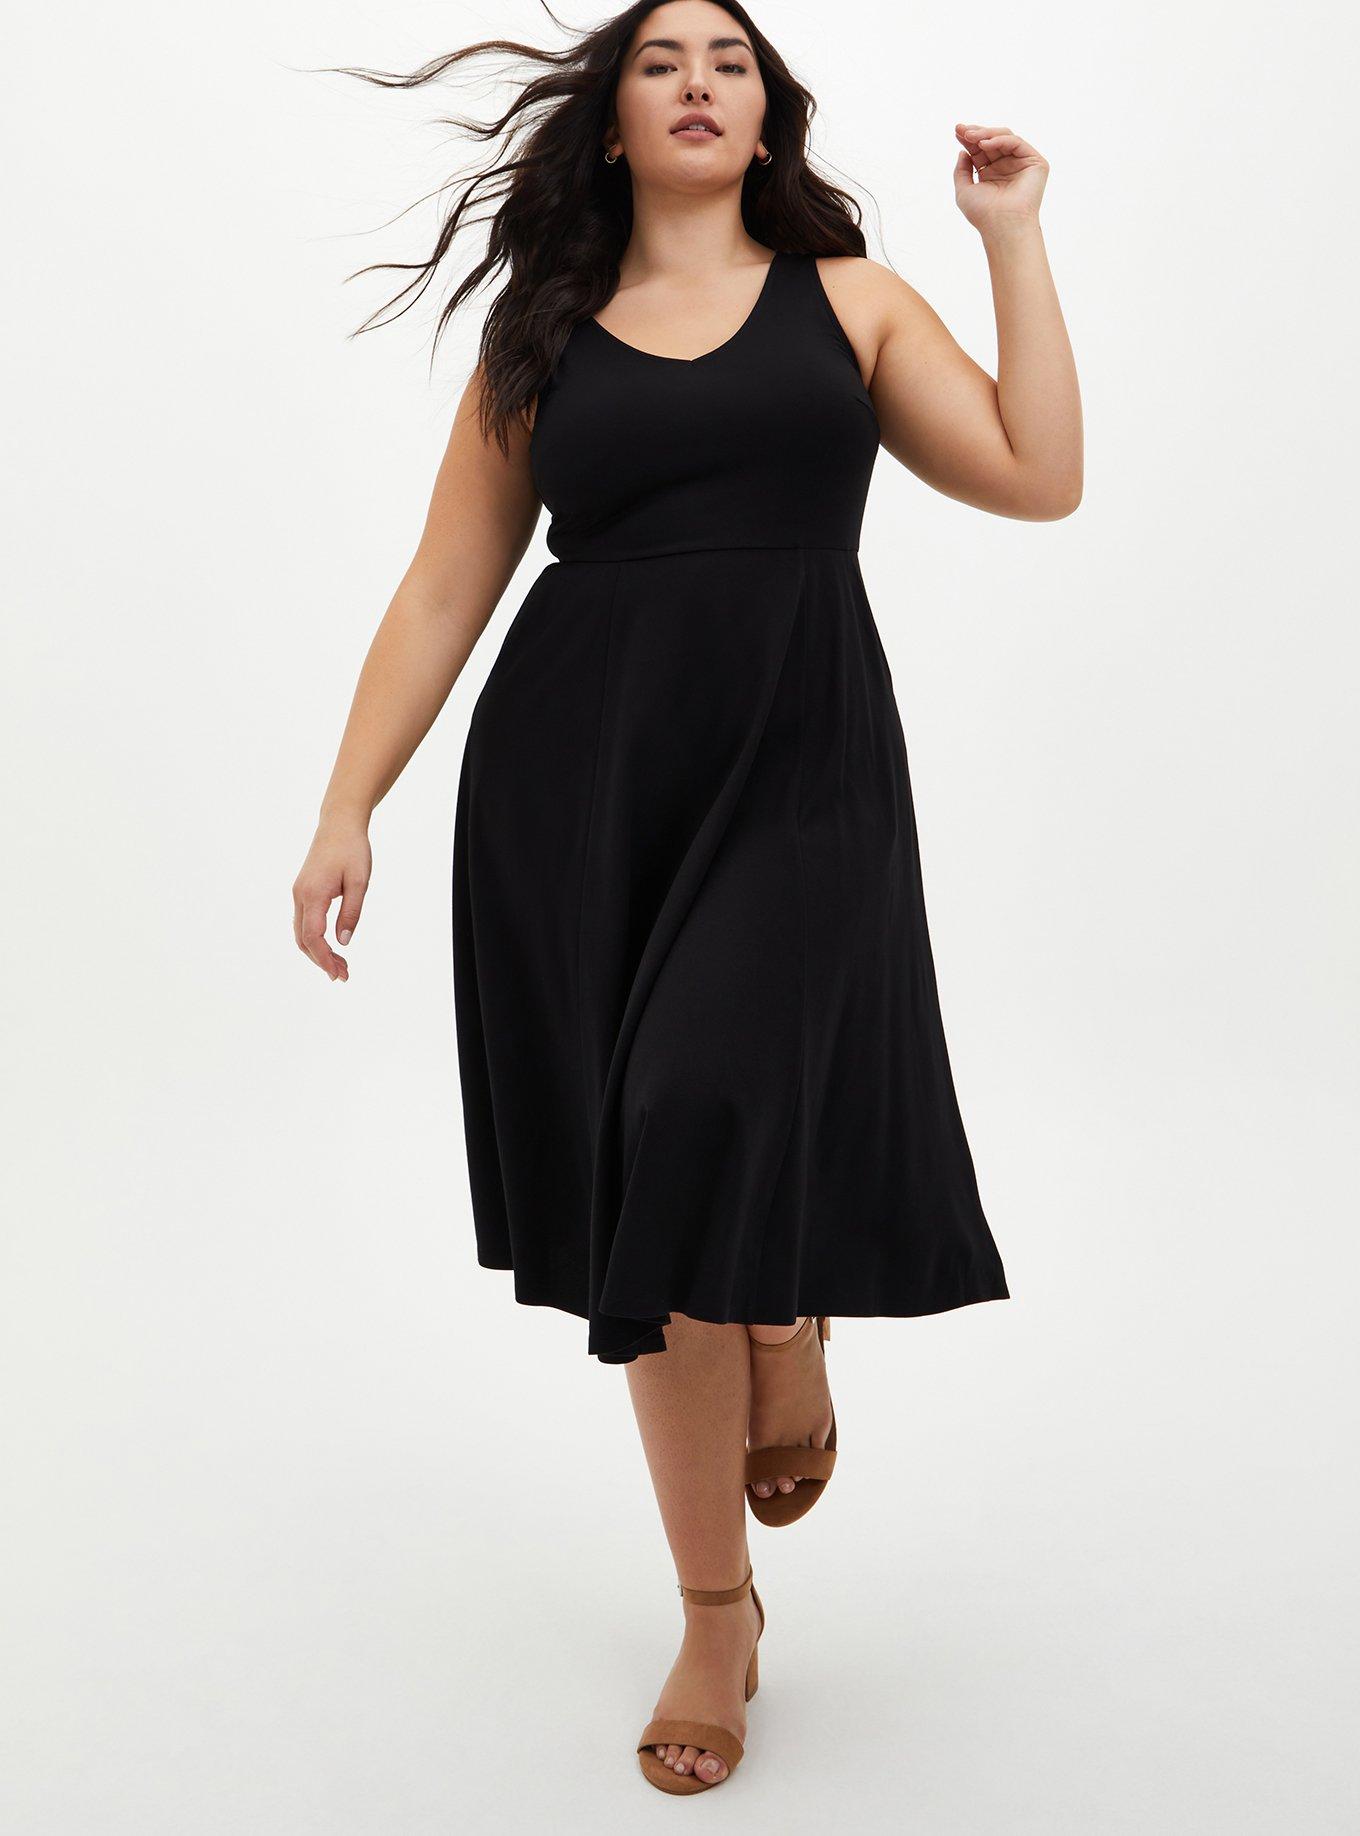 Torrid Black Sleeveless Textured Shift Midi Dress, Size 3 – The